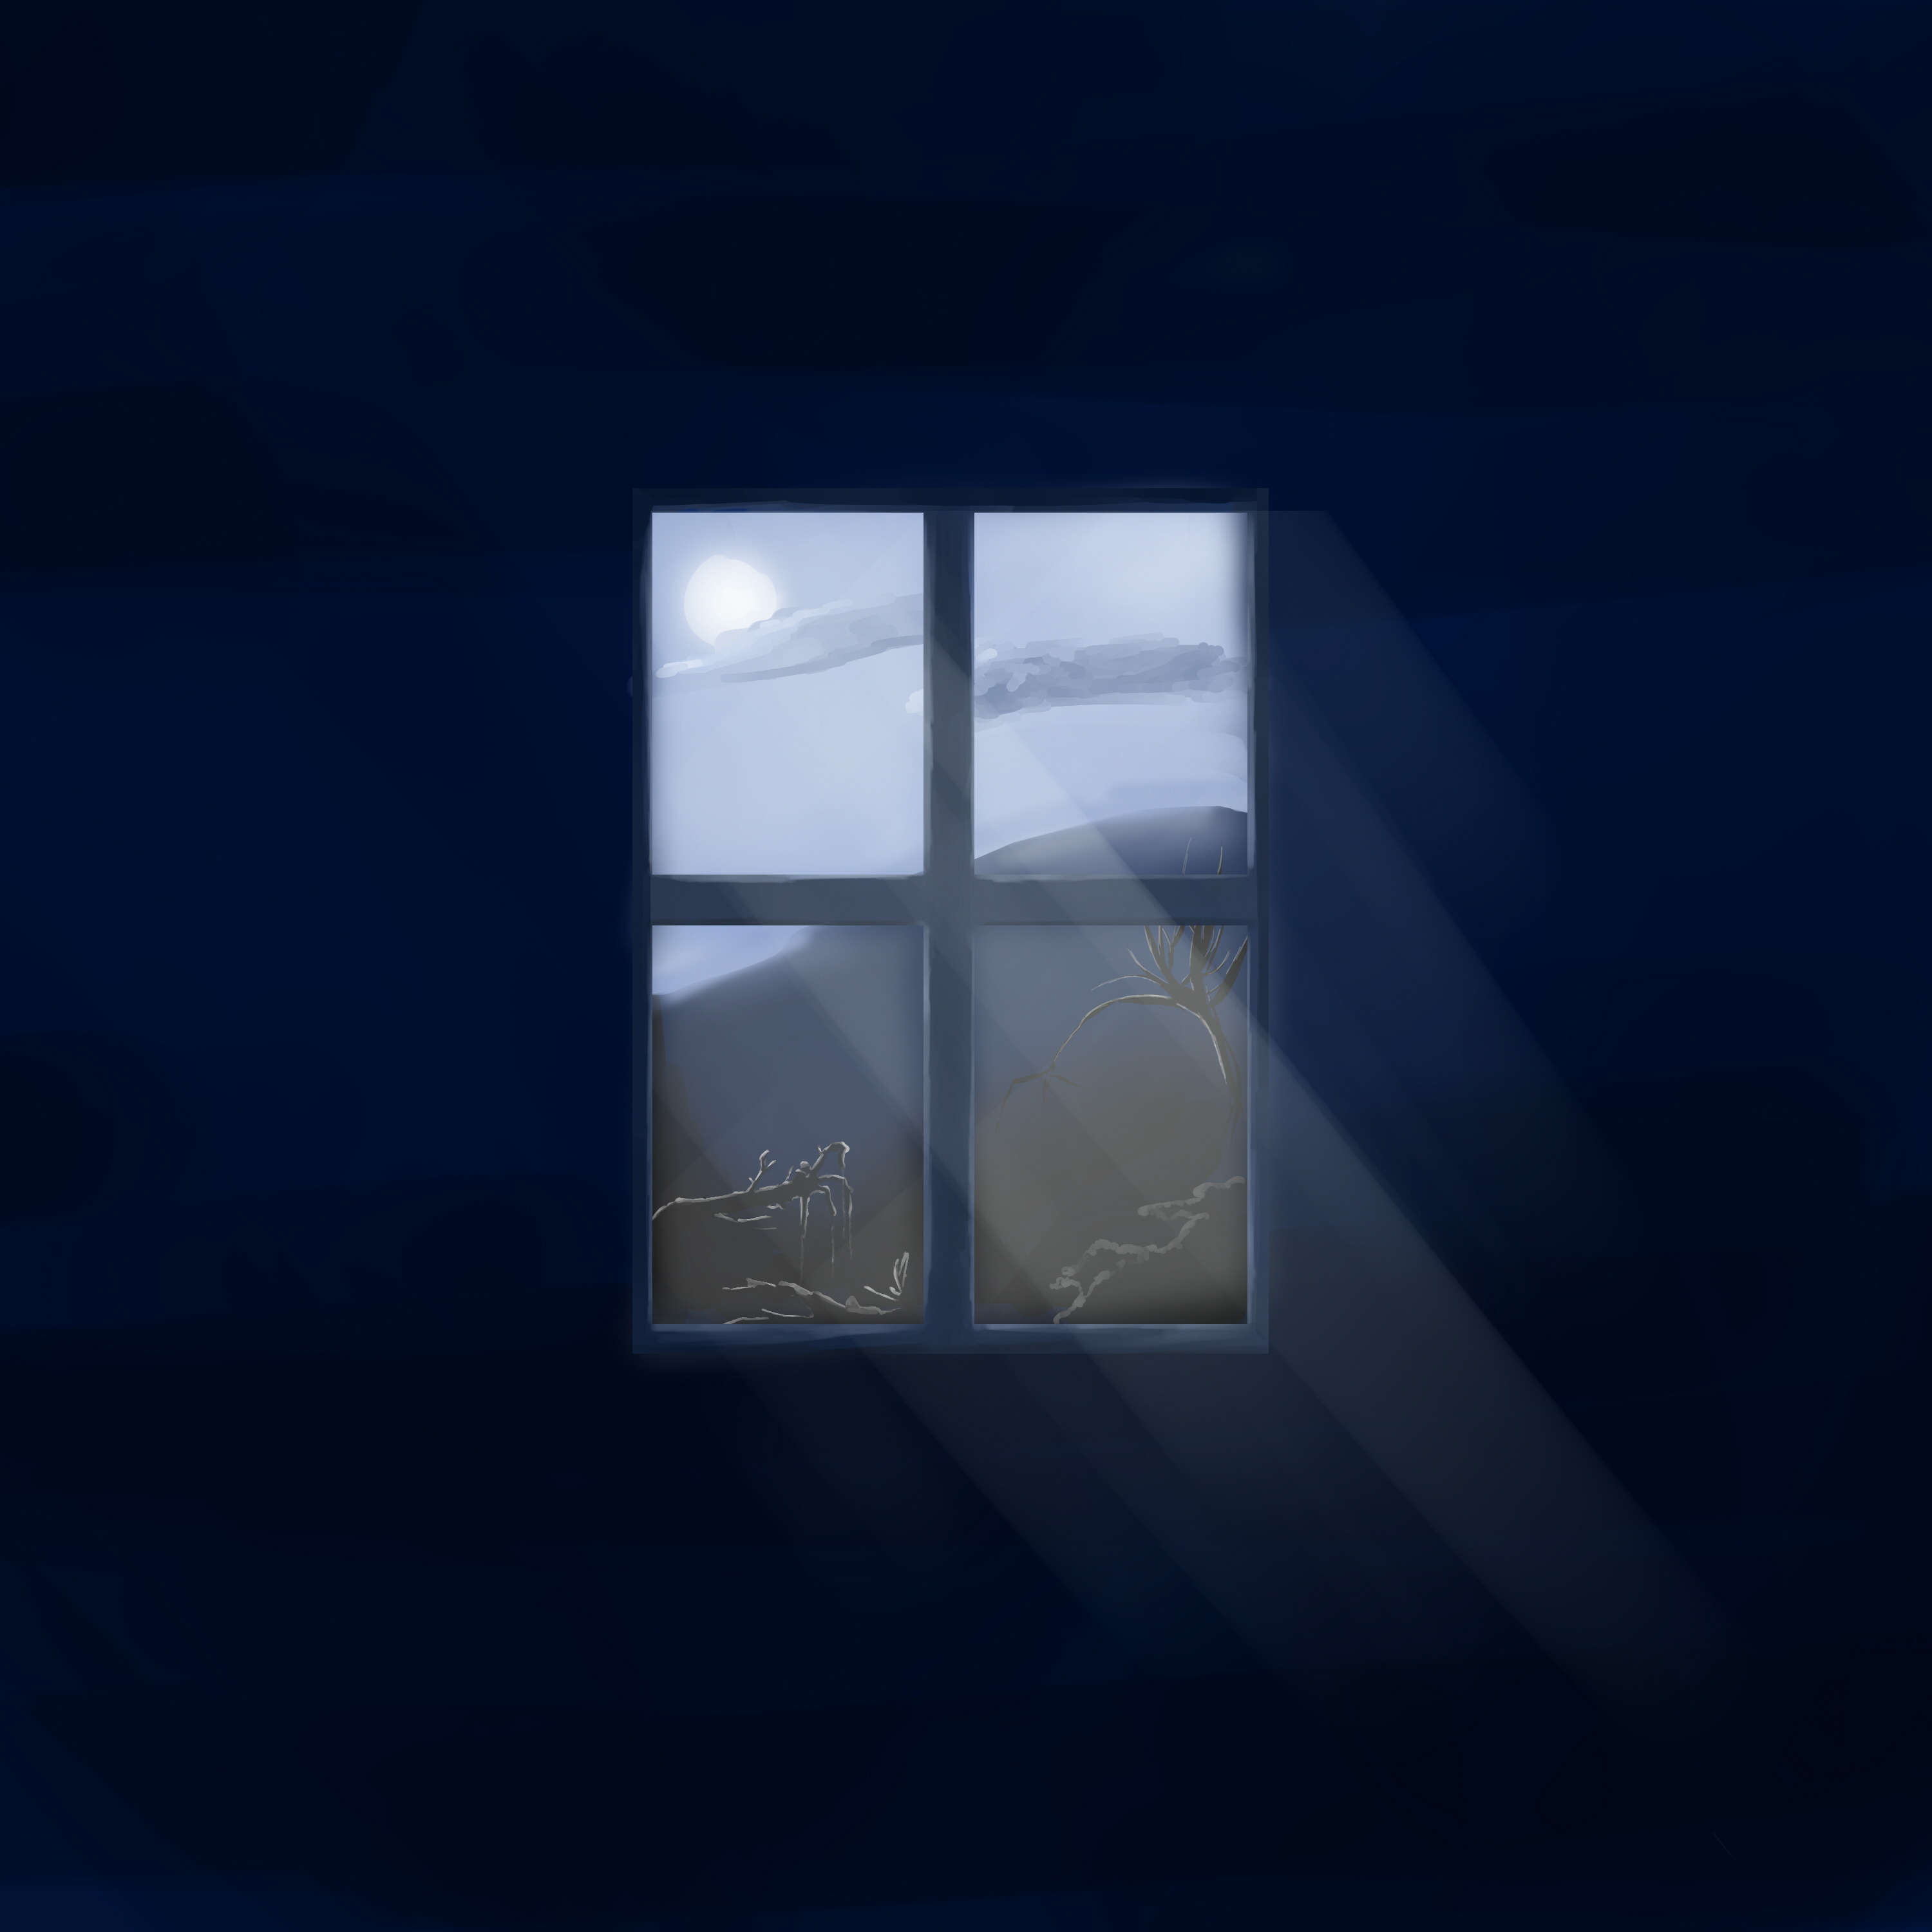 night window clipart - photo #37